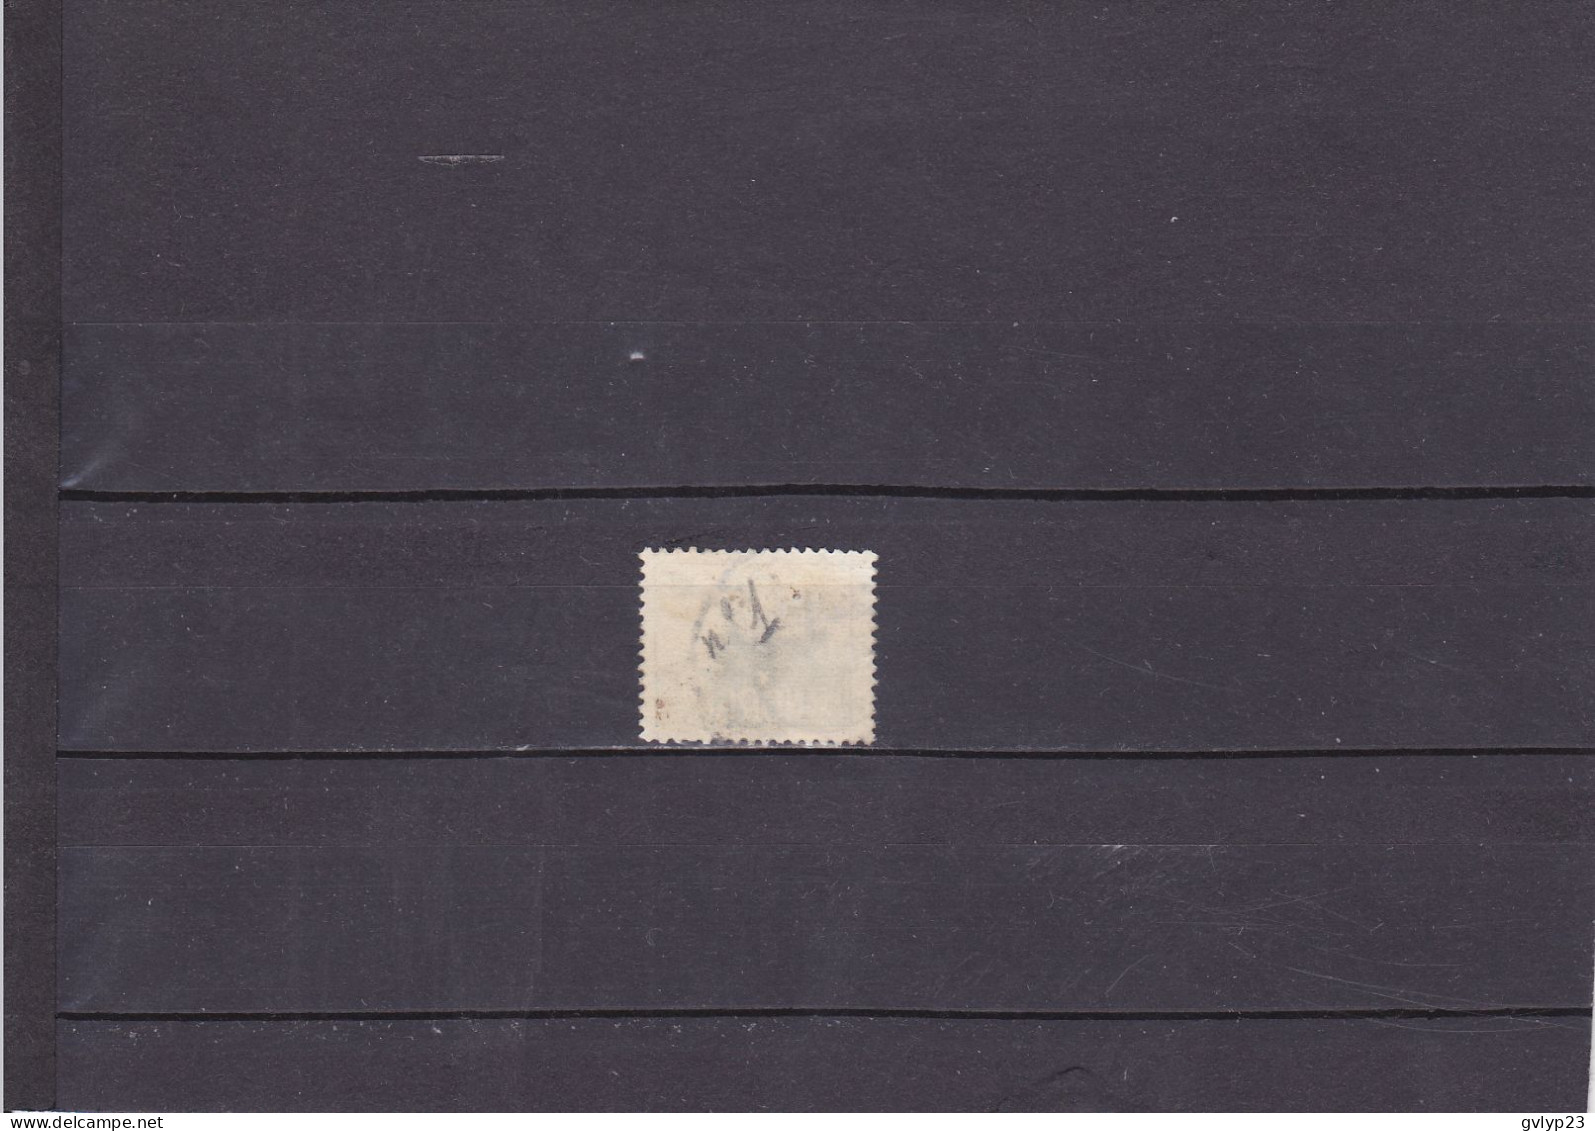 CHÂTEAU AKERSHUS à OSLO/OBLITéRé/N° 1 YVERT ET TELLIER 1927-34 - Used Stamps